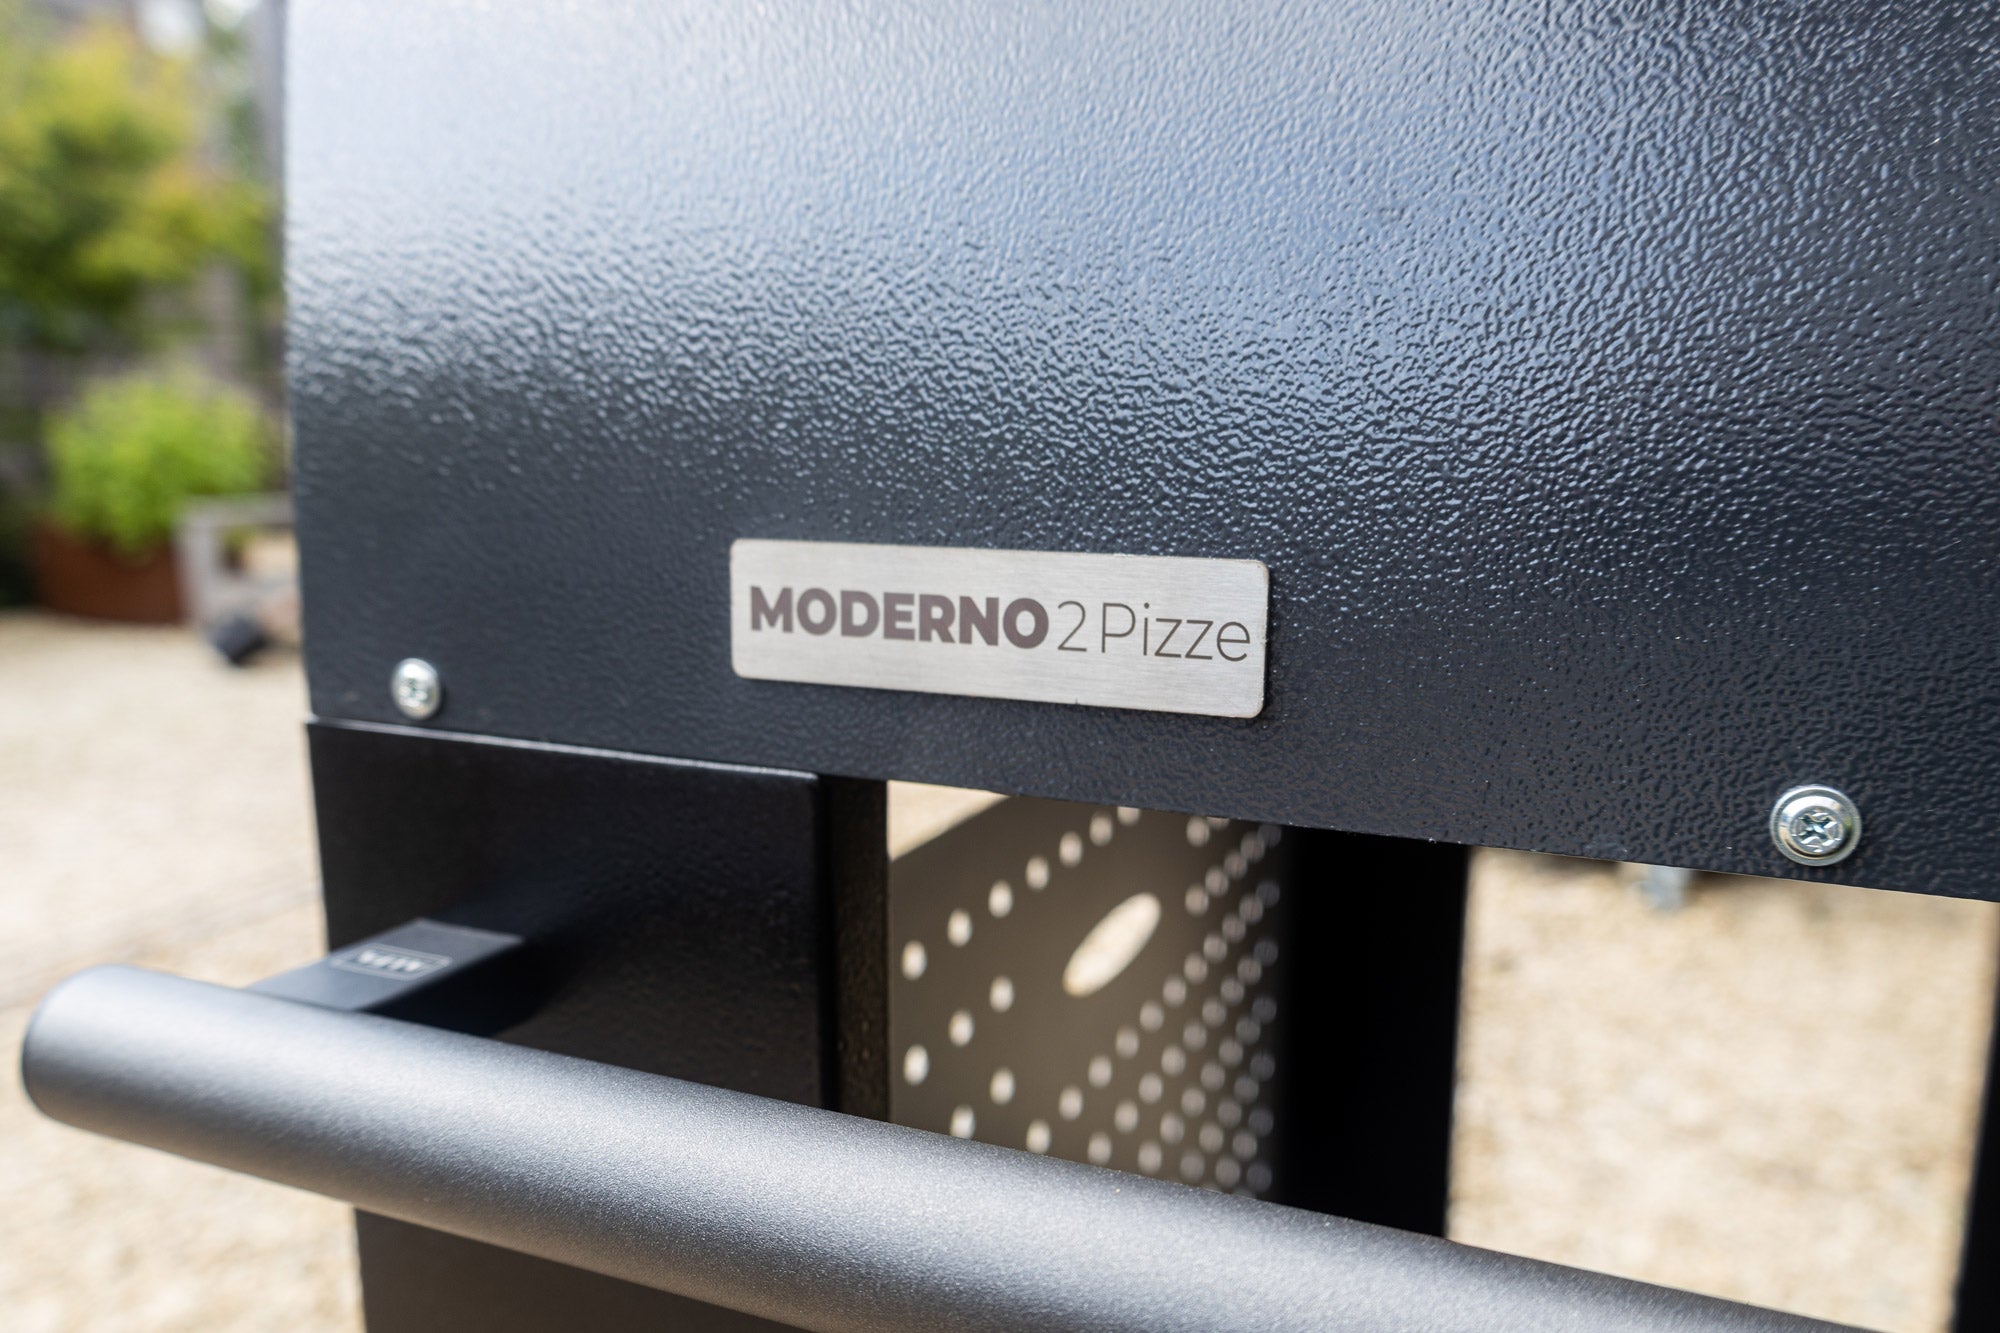 Moderno 2 Pizze